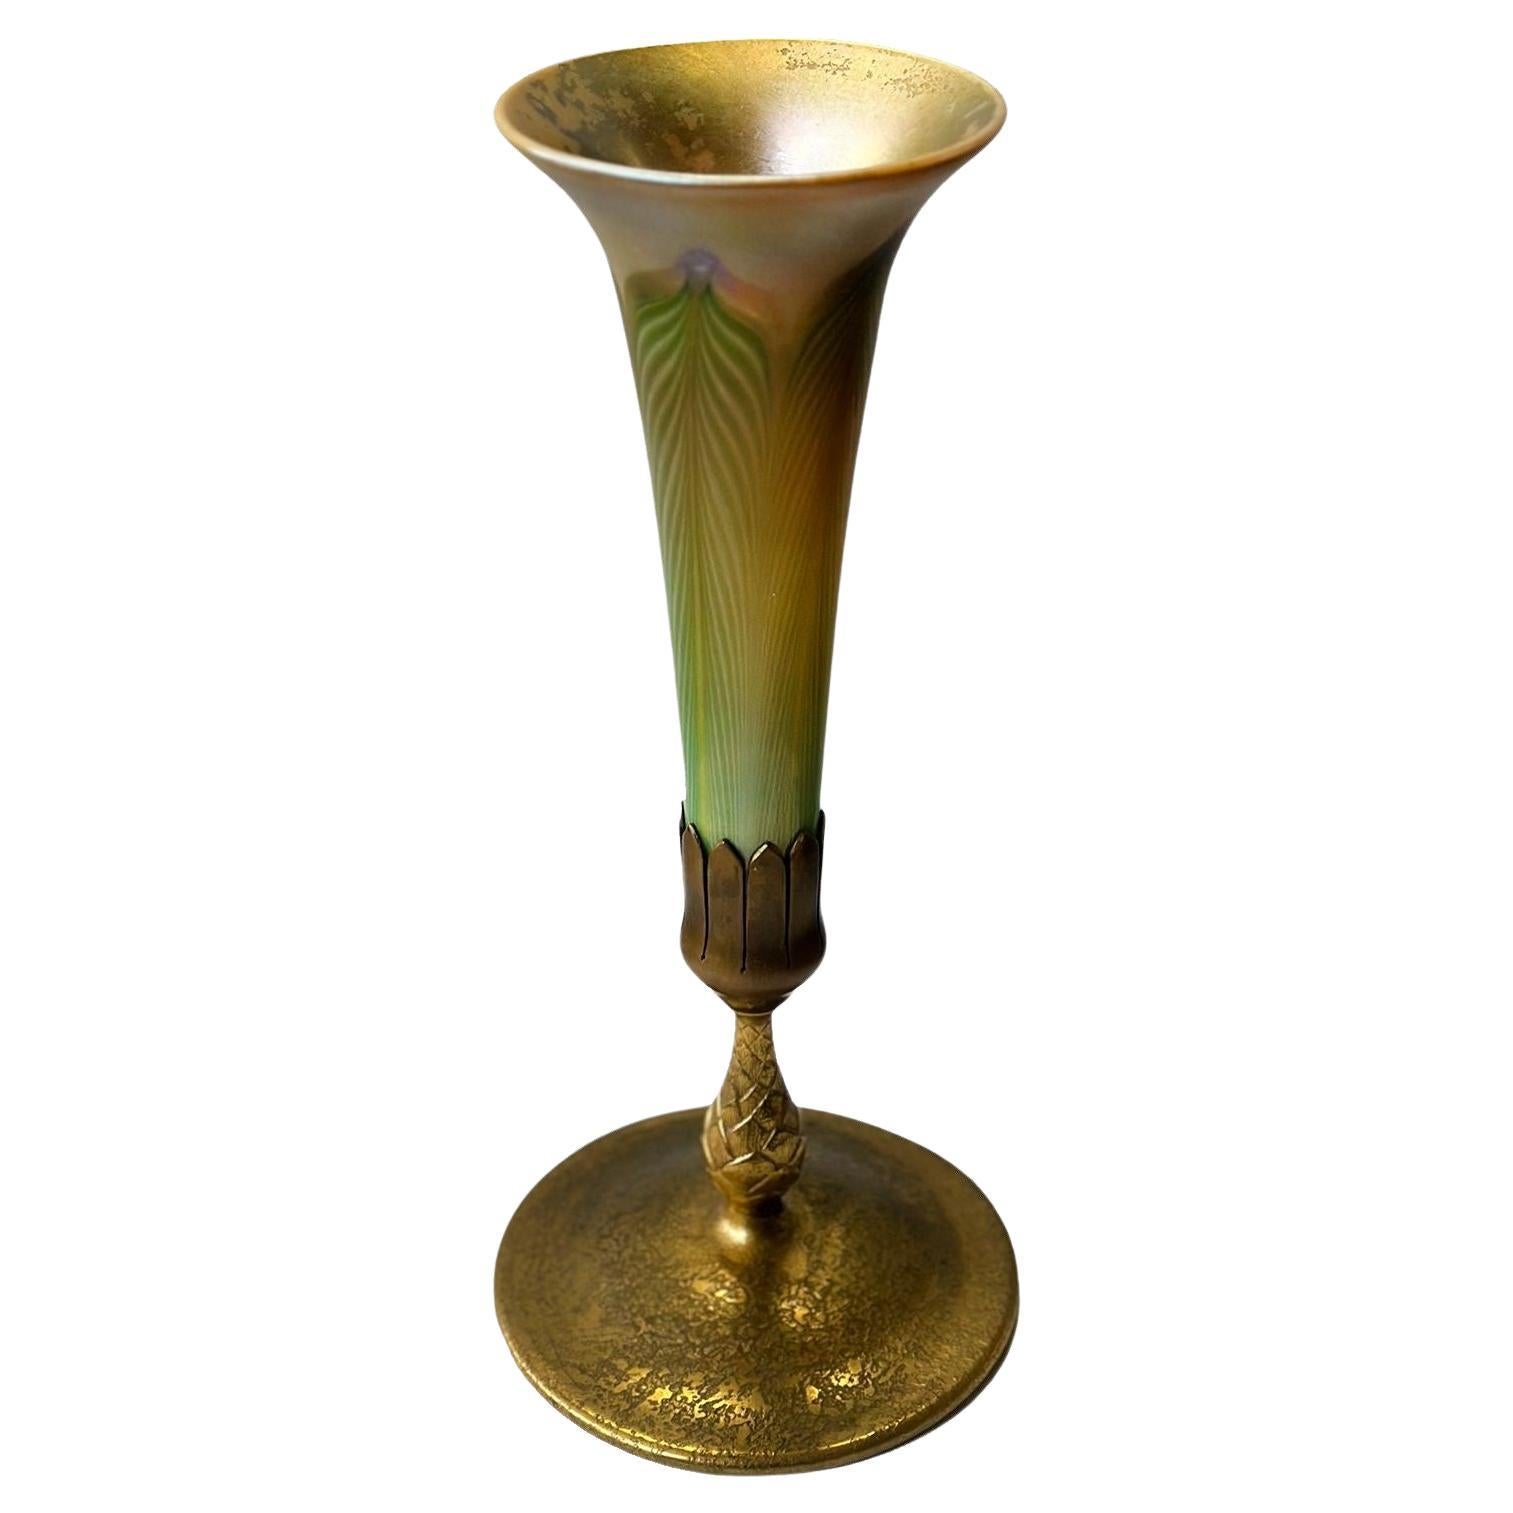 Vintage L.C. Tiffany Studios Favrile Glass Vase, c. 1980's For Sale